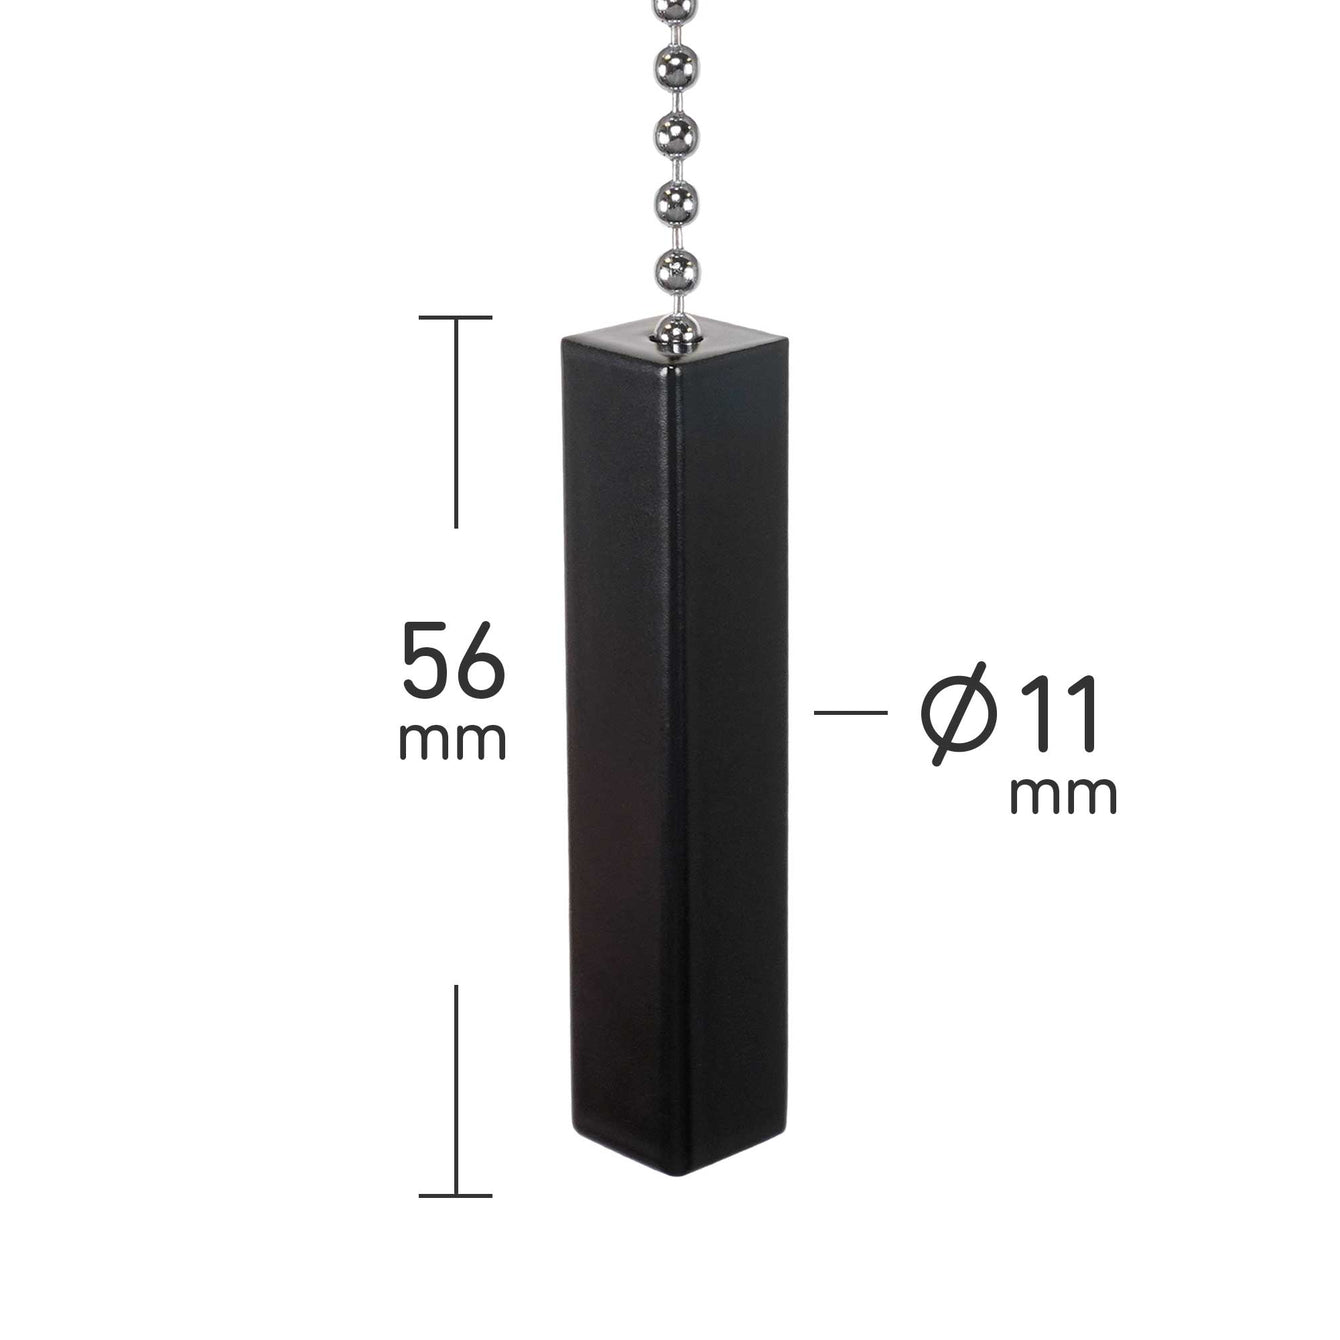 ElekTek Premium Matt Black Bathroom Light Pull Cord Switch Kit with Pull Chain Handle Black Cylinder / Chrome